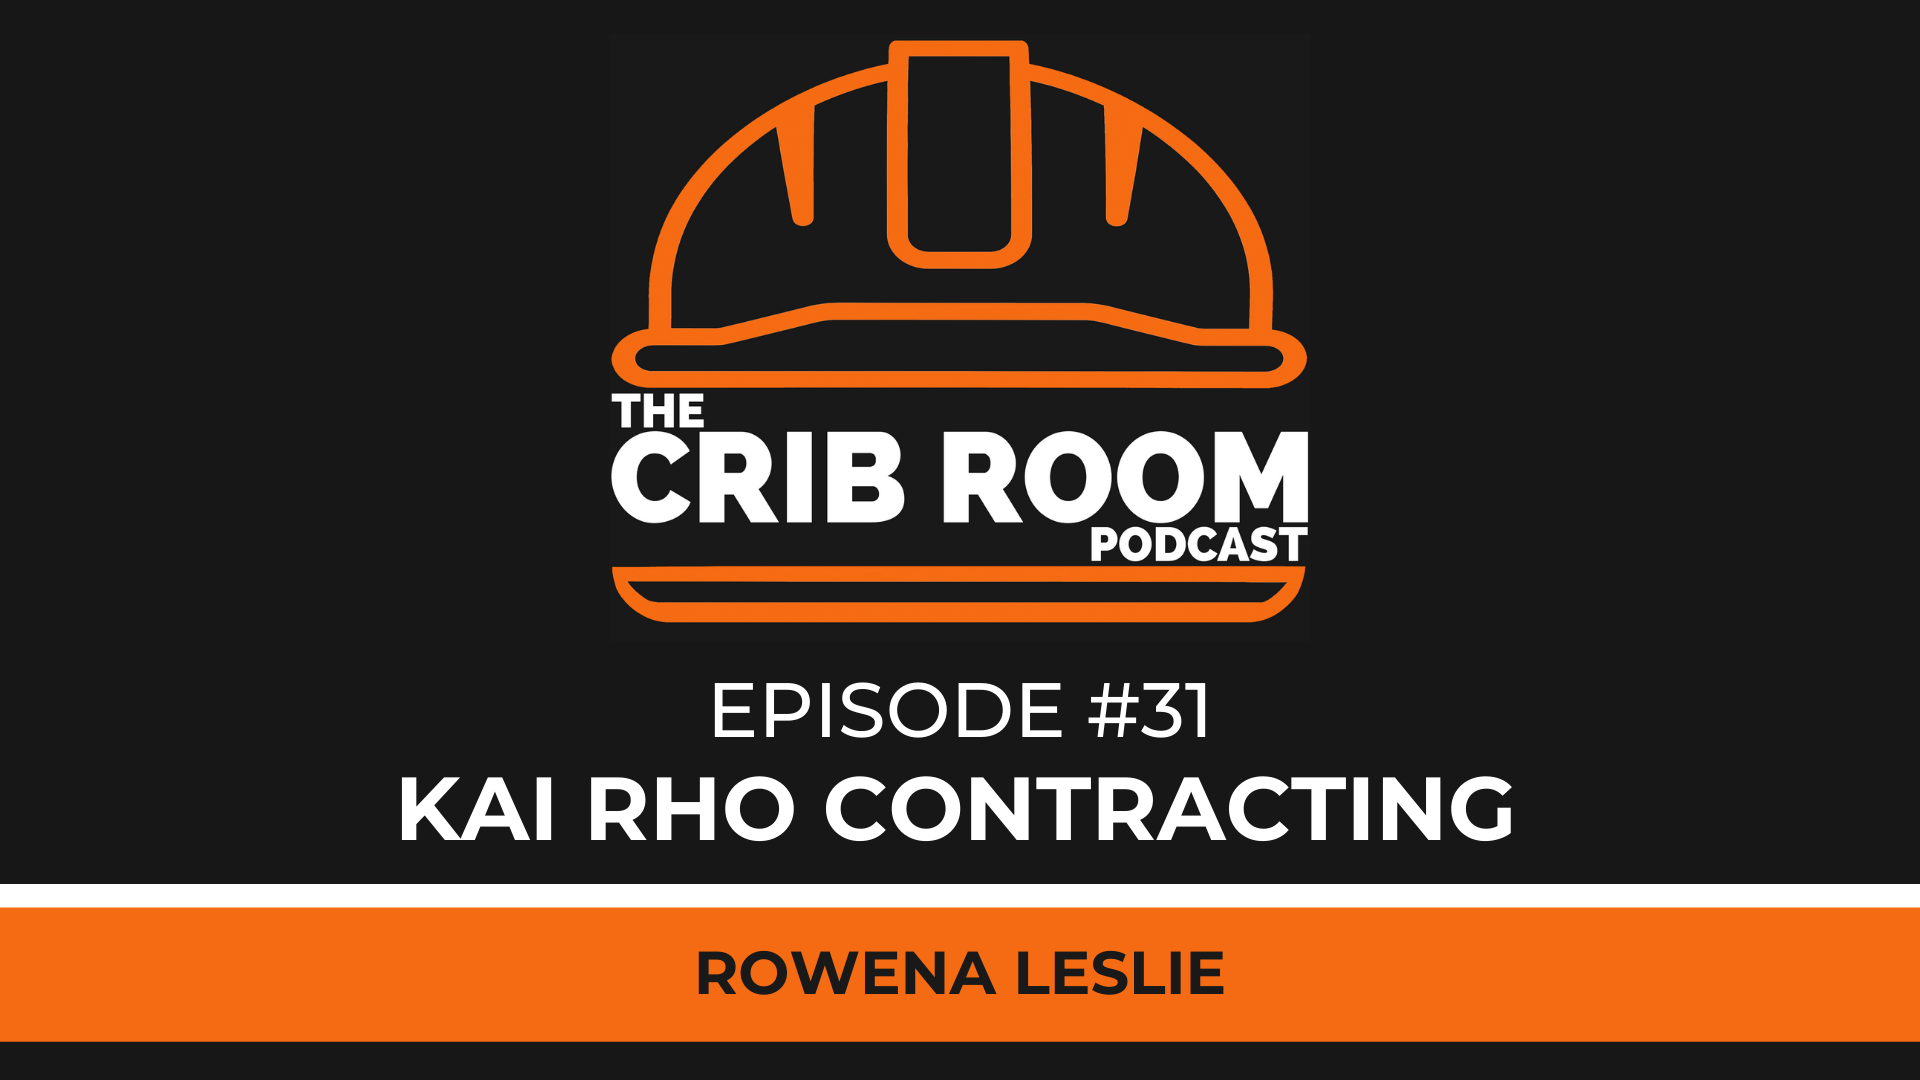 Series 2 - Episode 1 - Rowena Leslie - Kai Rho Contracting